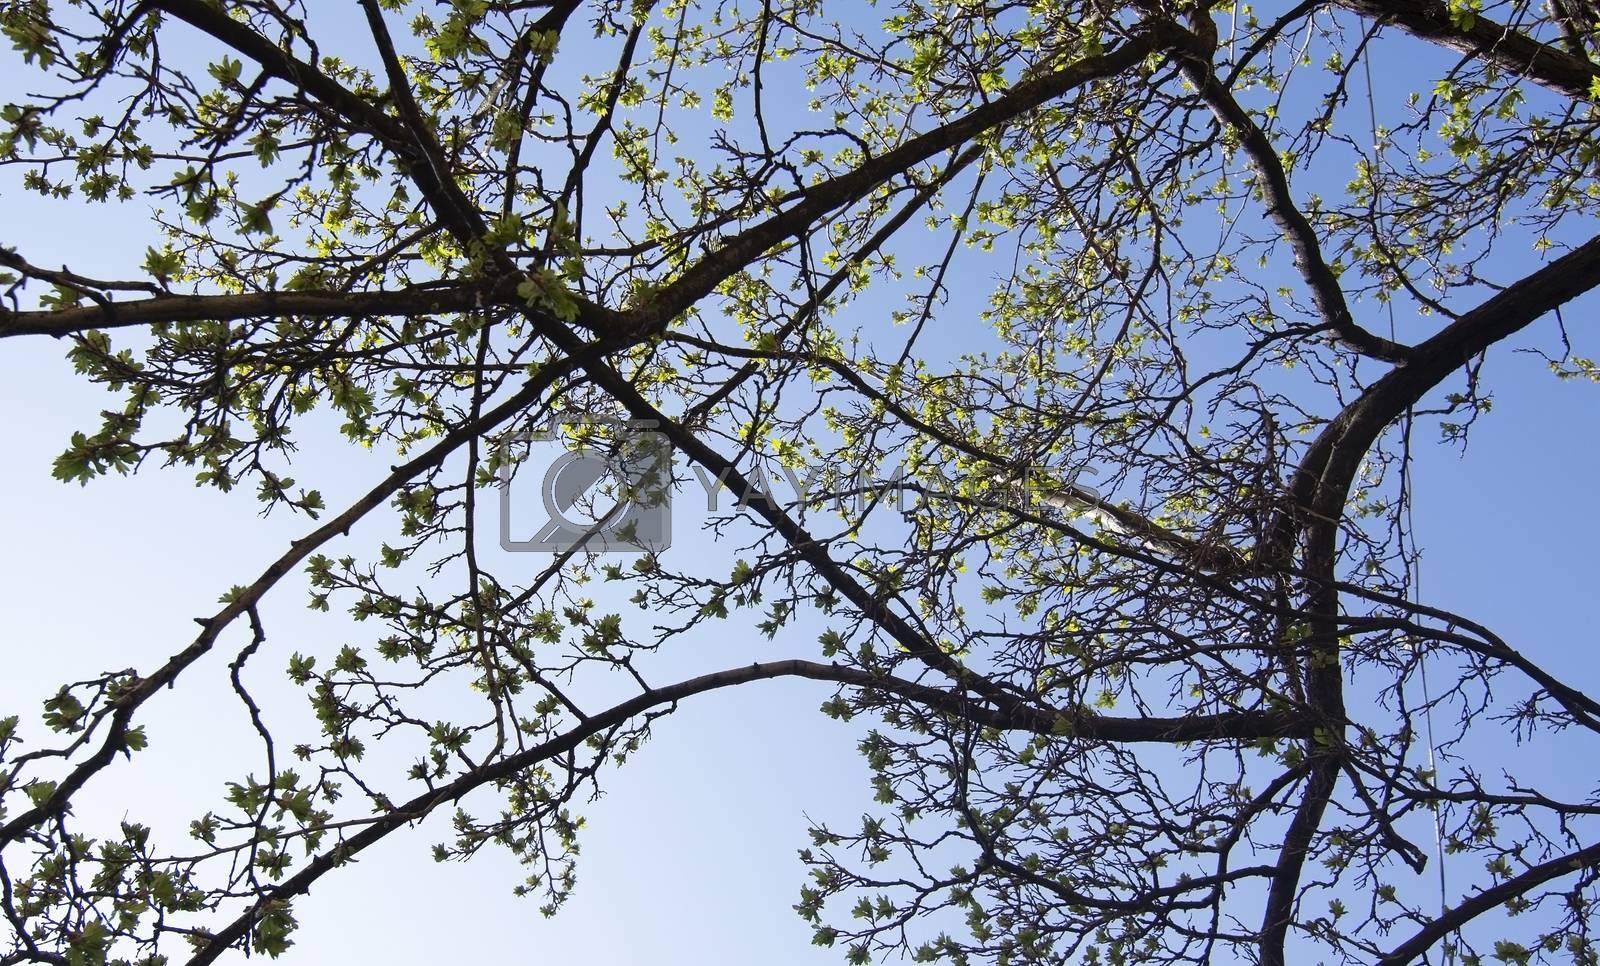 Royalty free image of Spring green leaves and blue sky between buildings by ArtesiaWells